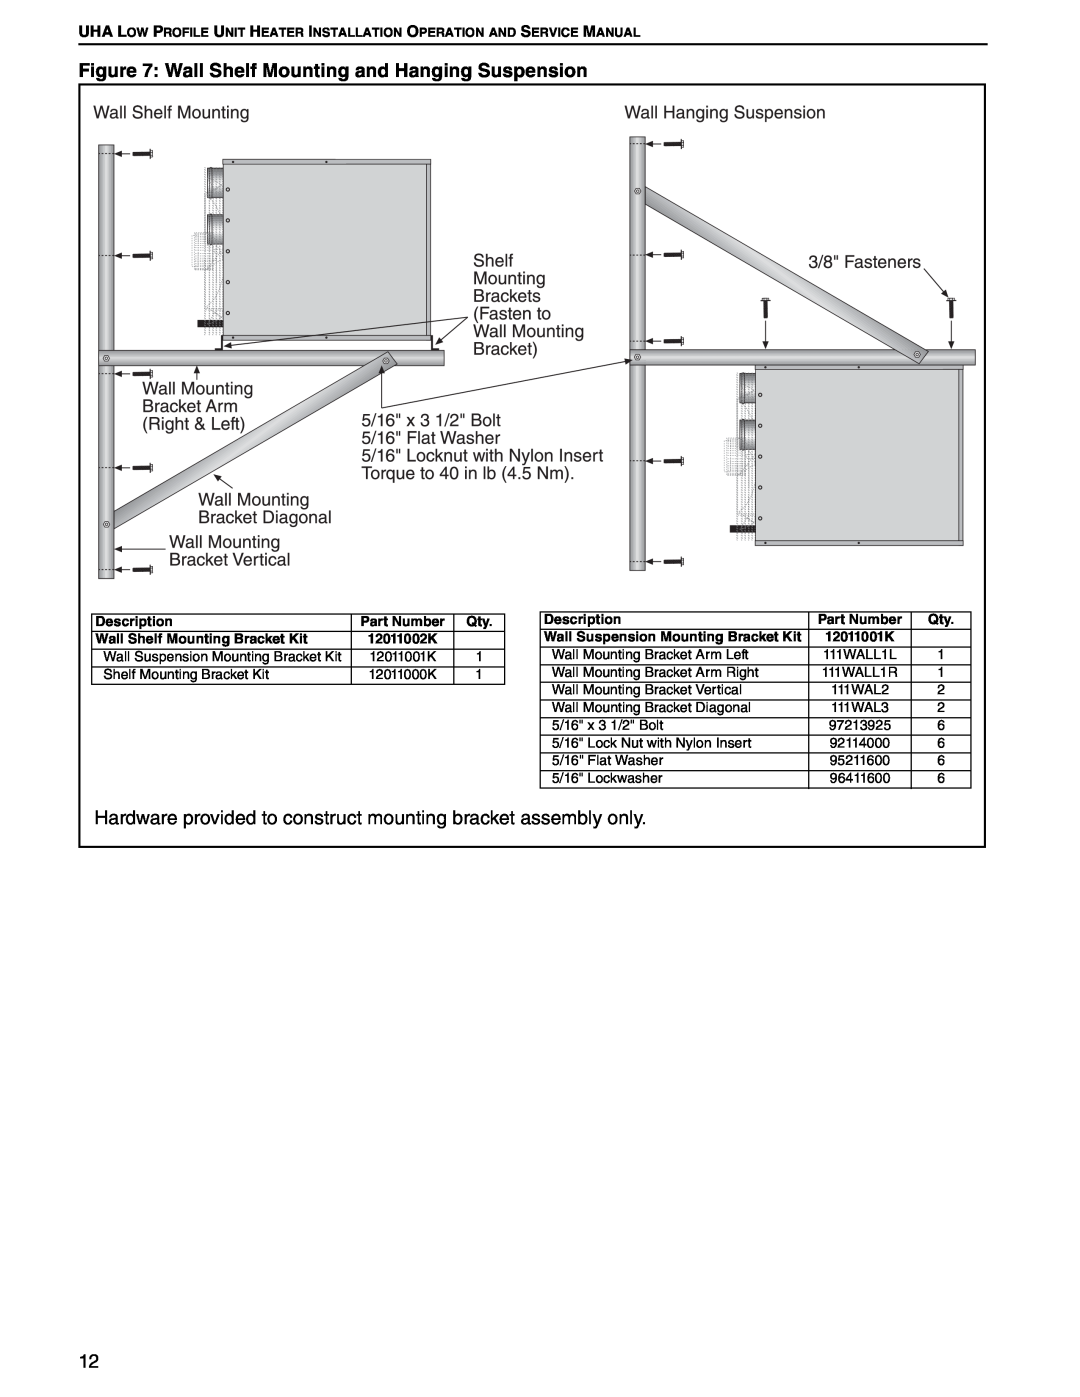 Roberts Gorden 75, 100, 125, 45, 30, 60 service manual Description, Part Number, Wall Shelf Mounting Bracket Kit 